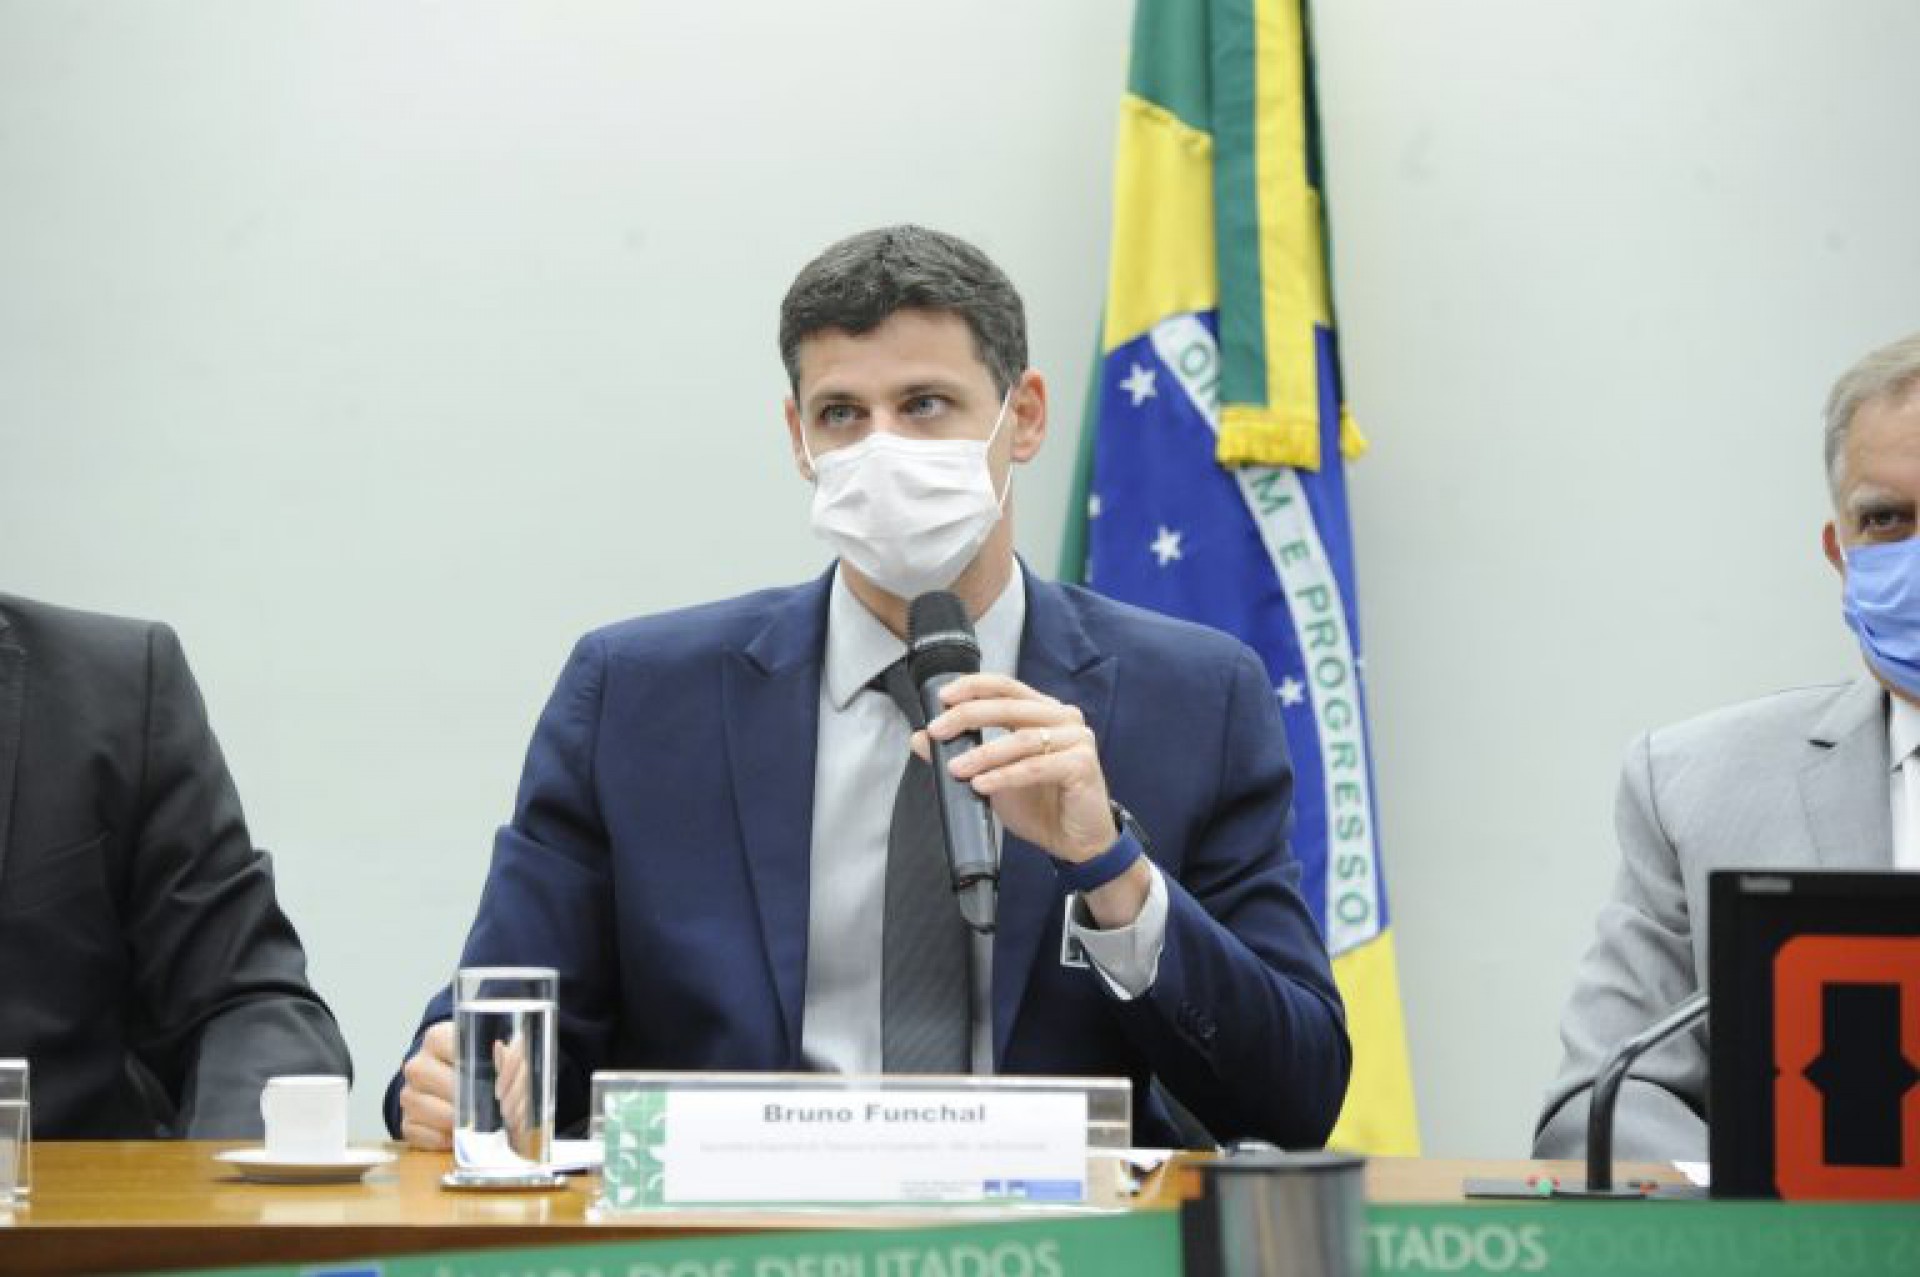 Titular do Tesouro Nacional, Bruno Funchal (Foto: Agência Câmara)